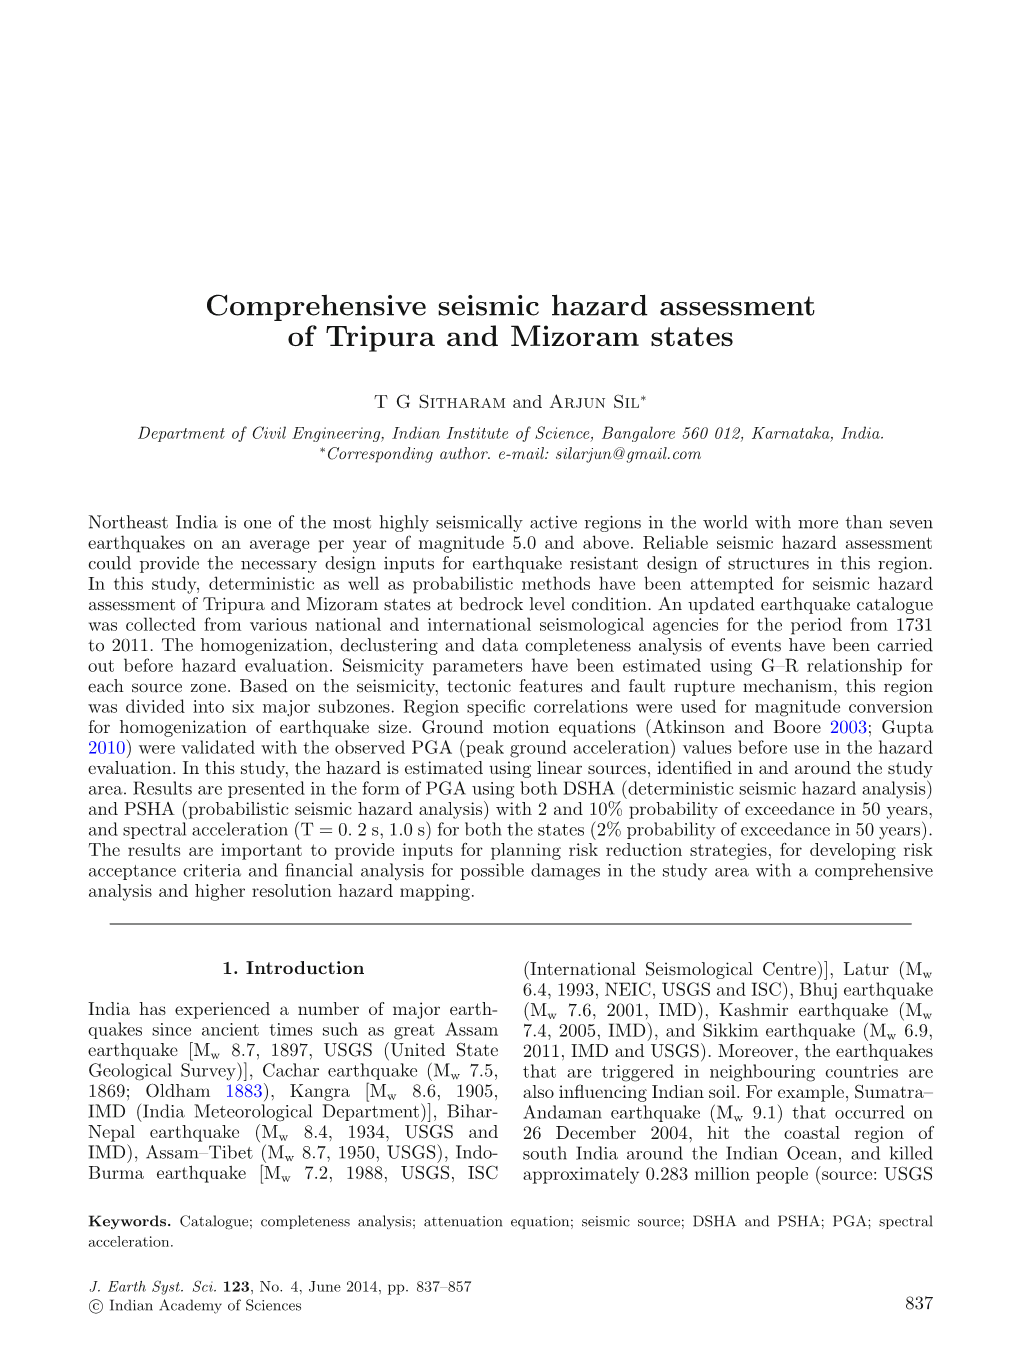 Comprehensive Seismic Hazard Assessment of Tripura and Mizoram States